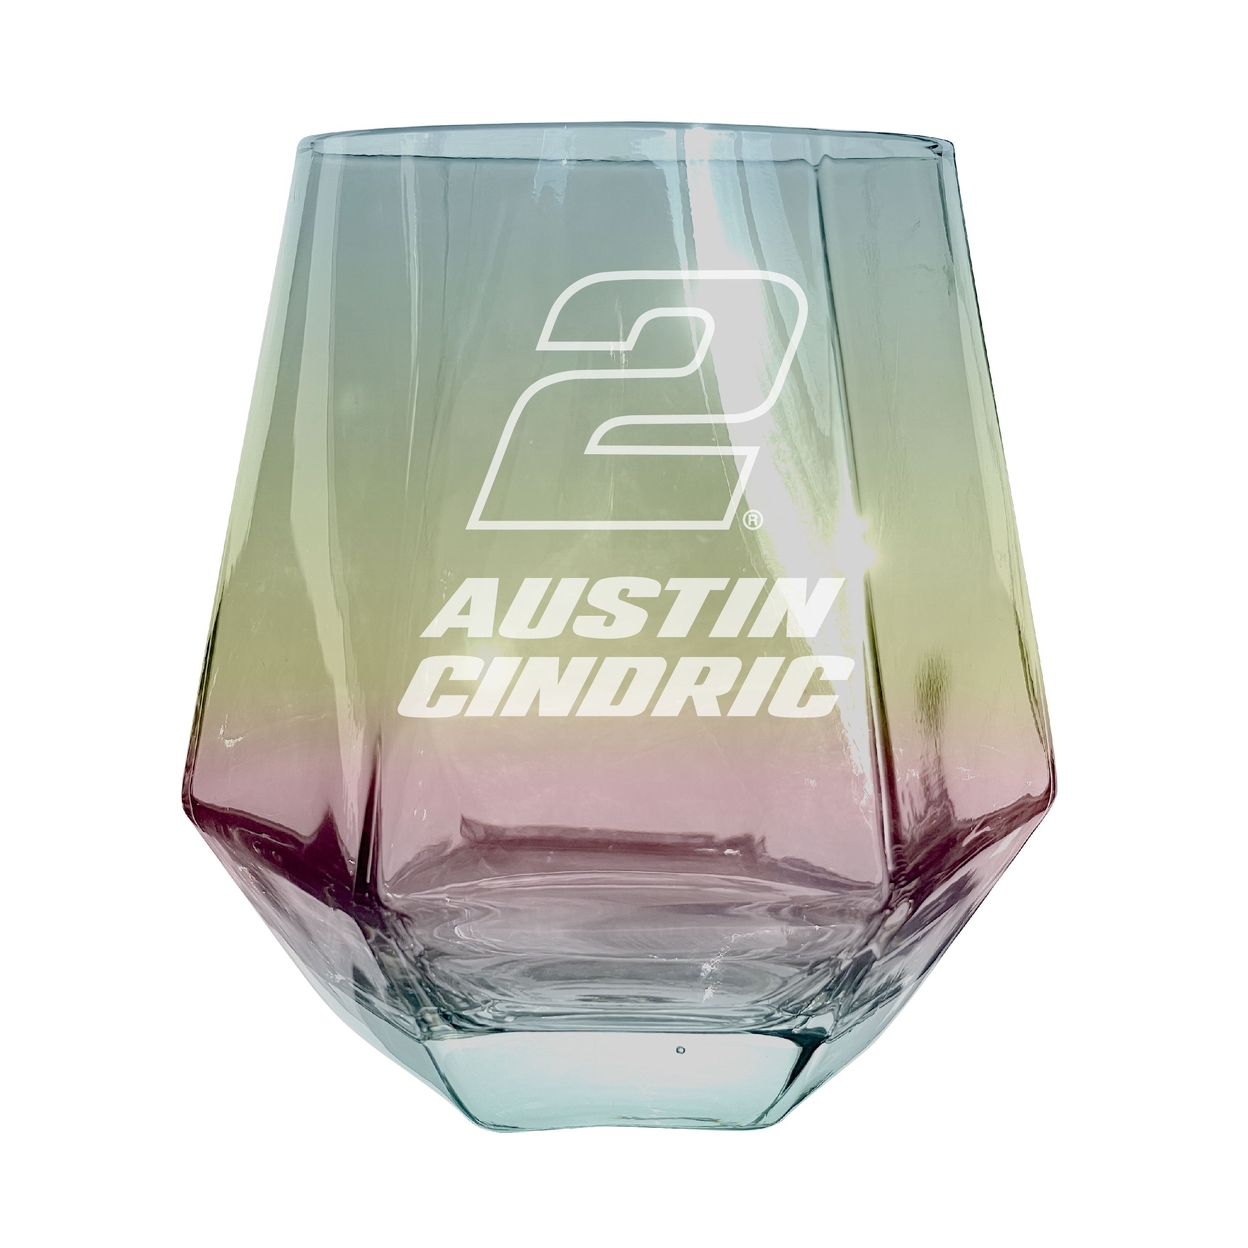 #2 Austin Cindric Officially Licensed 10 Oz Engraved Diamond Wine Glass - Grey, Single